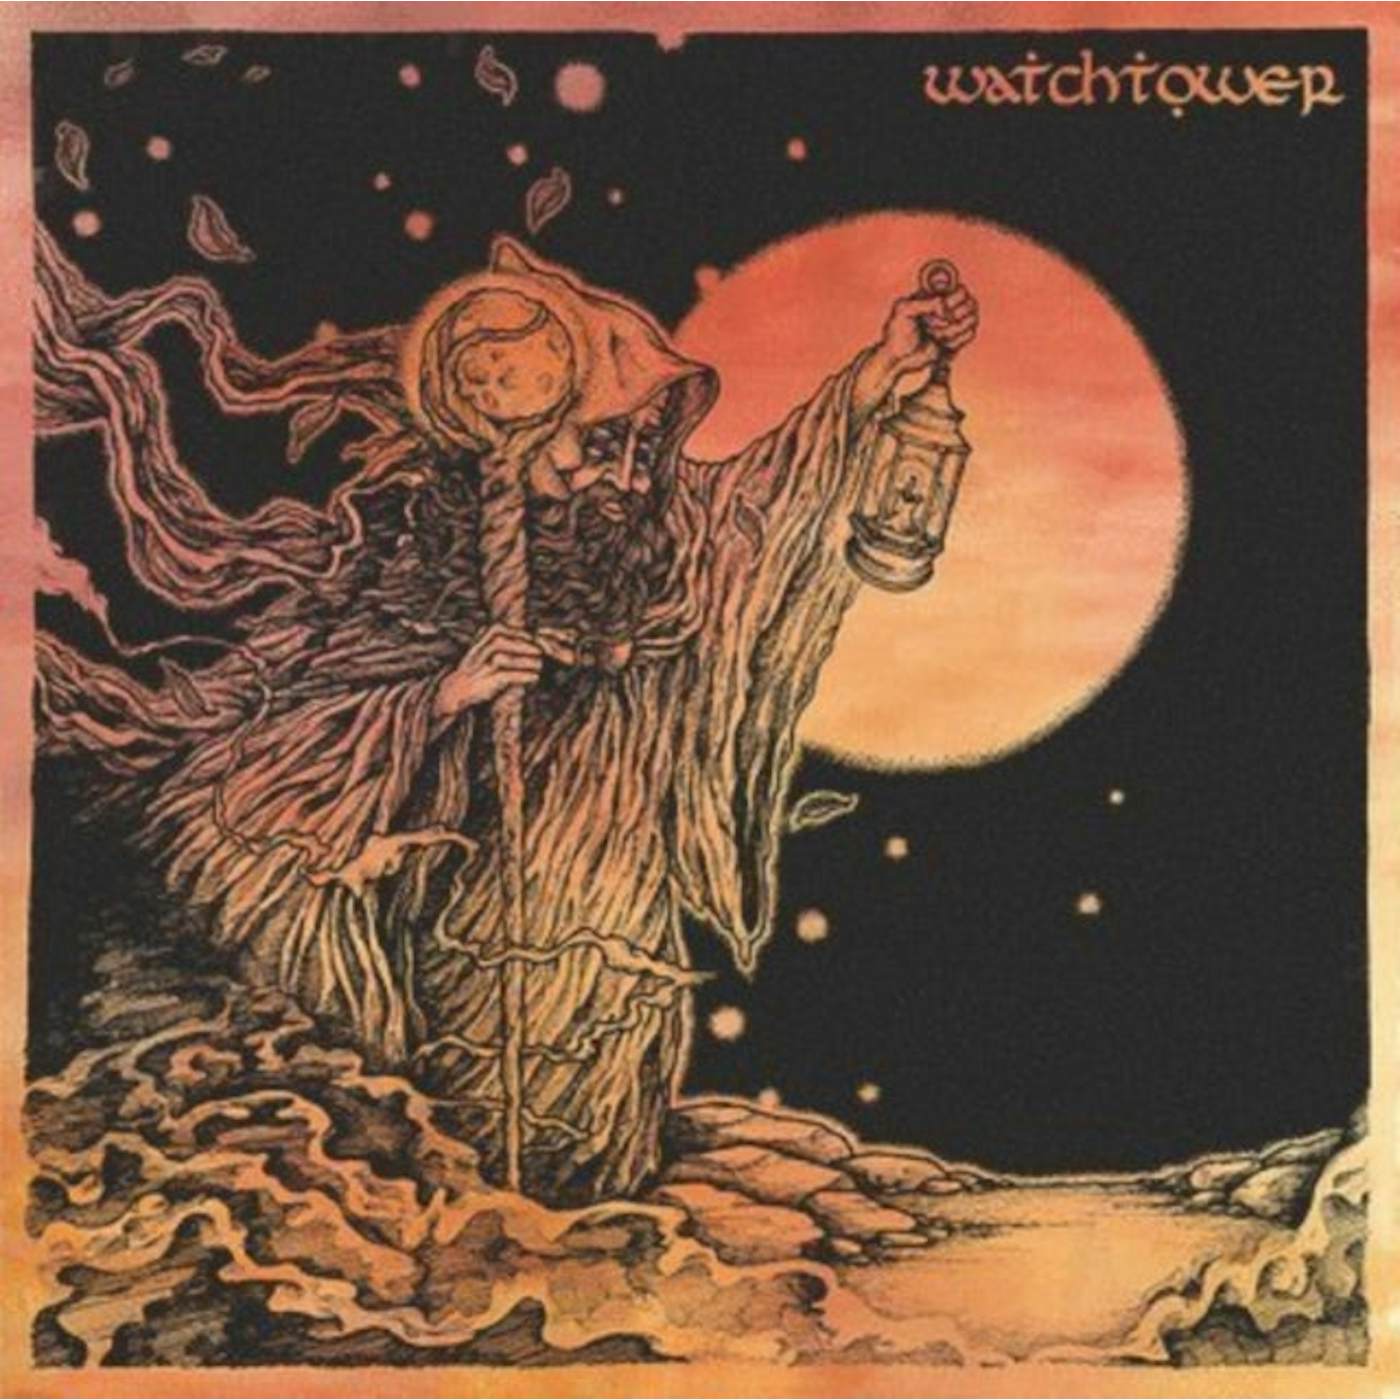 Watchtower LP Vinyl Record - Radiant Moon (Electric Blue Smoke Vinyl)